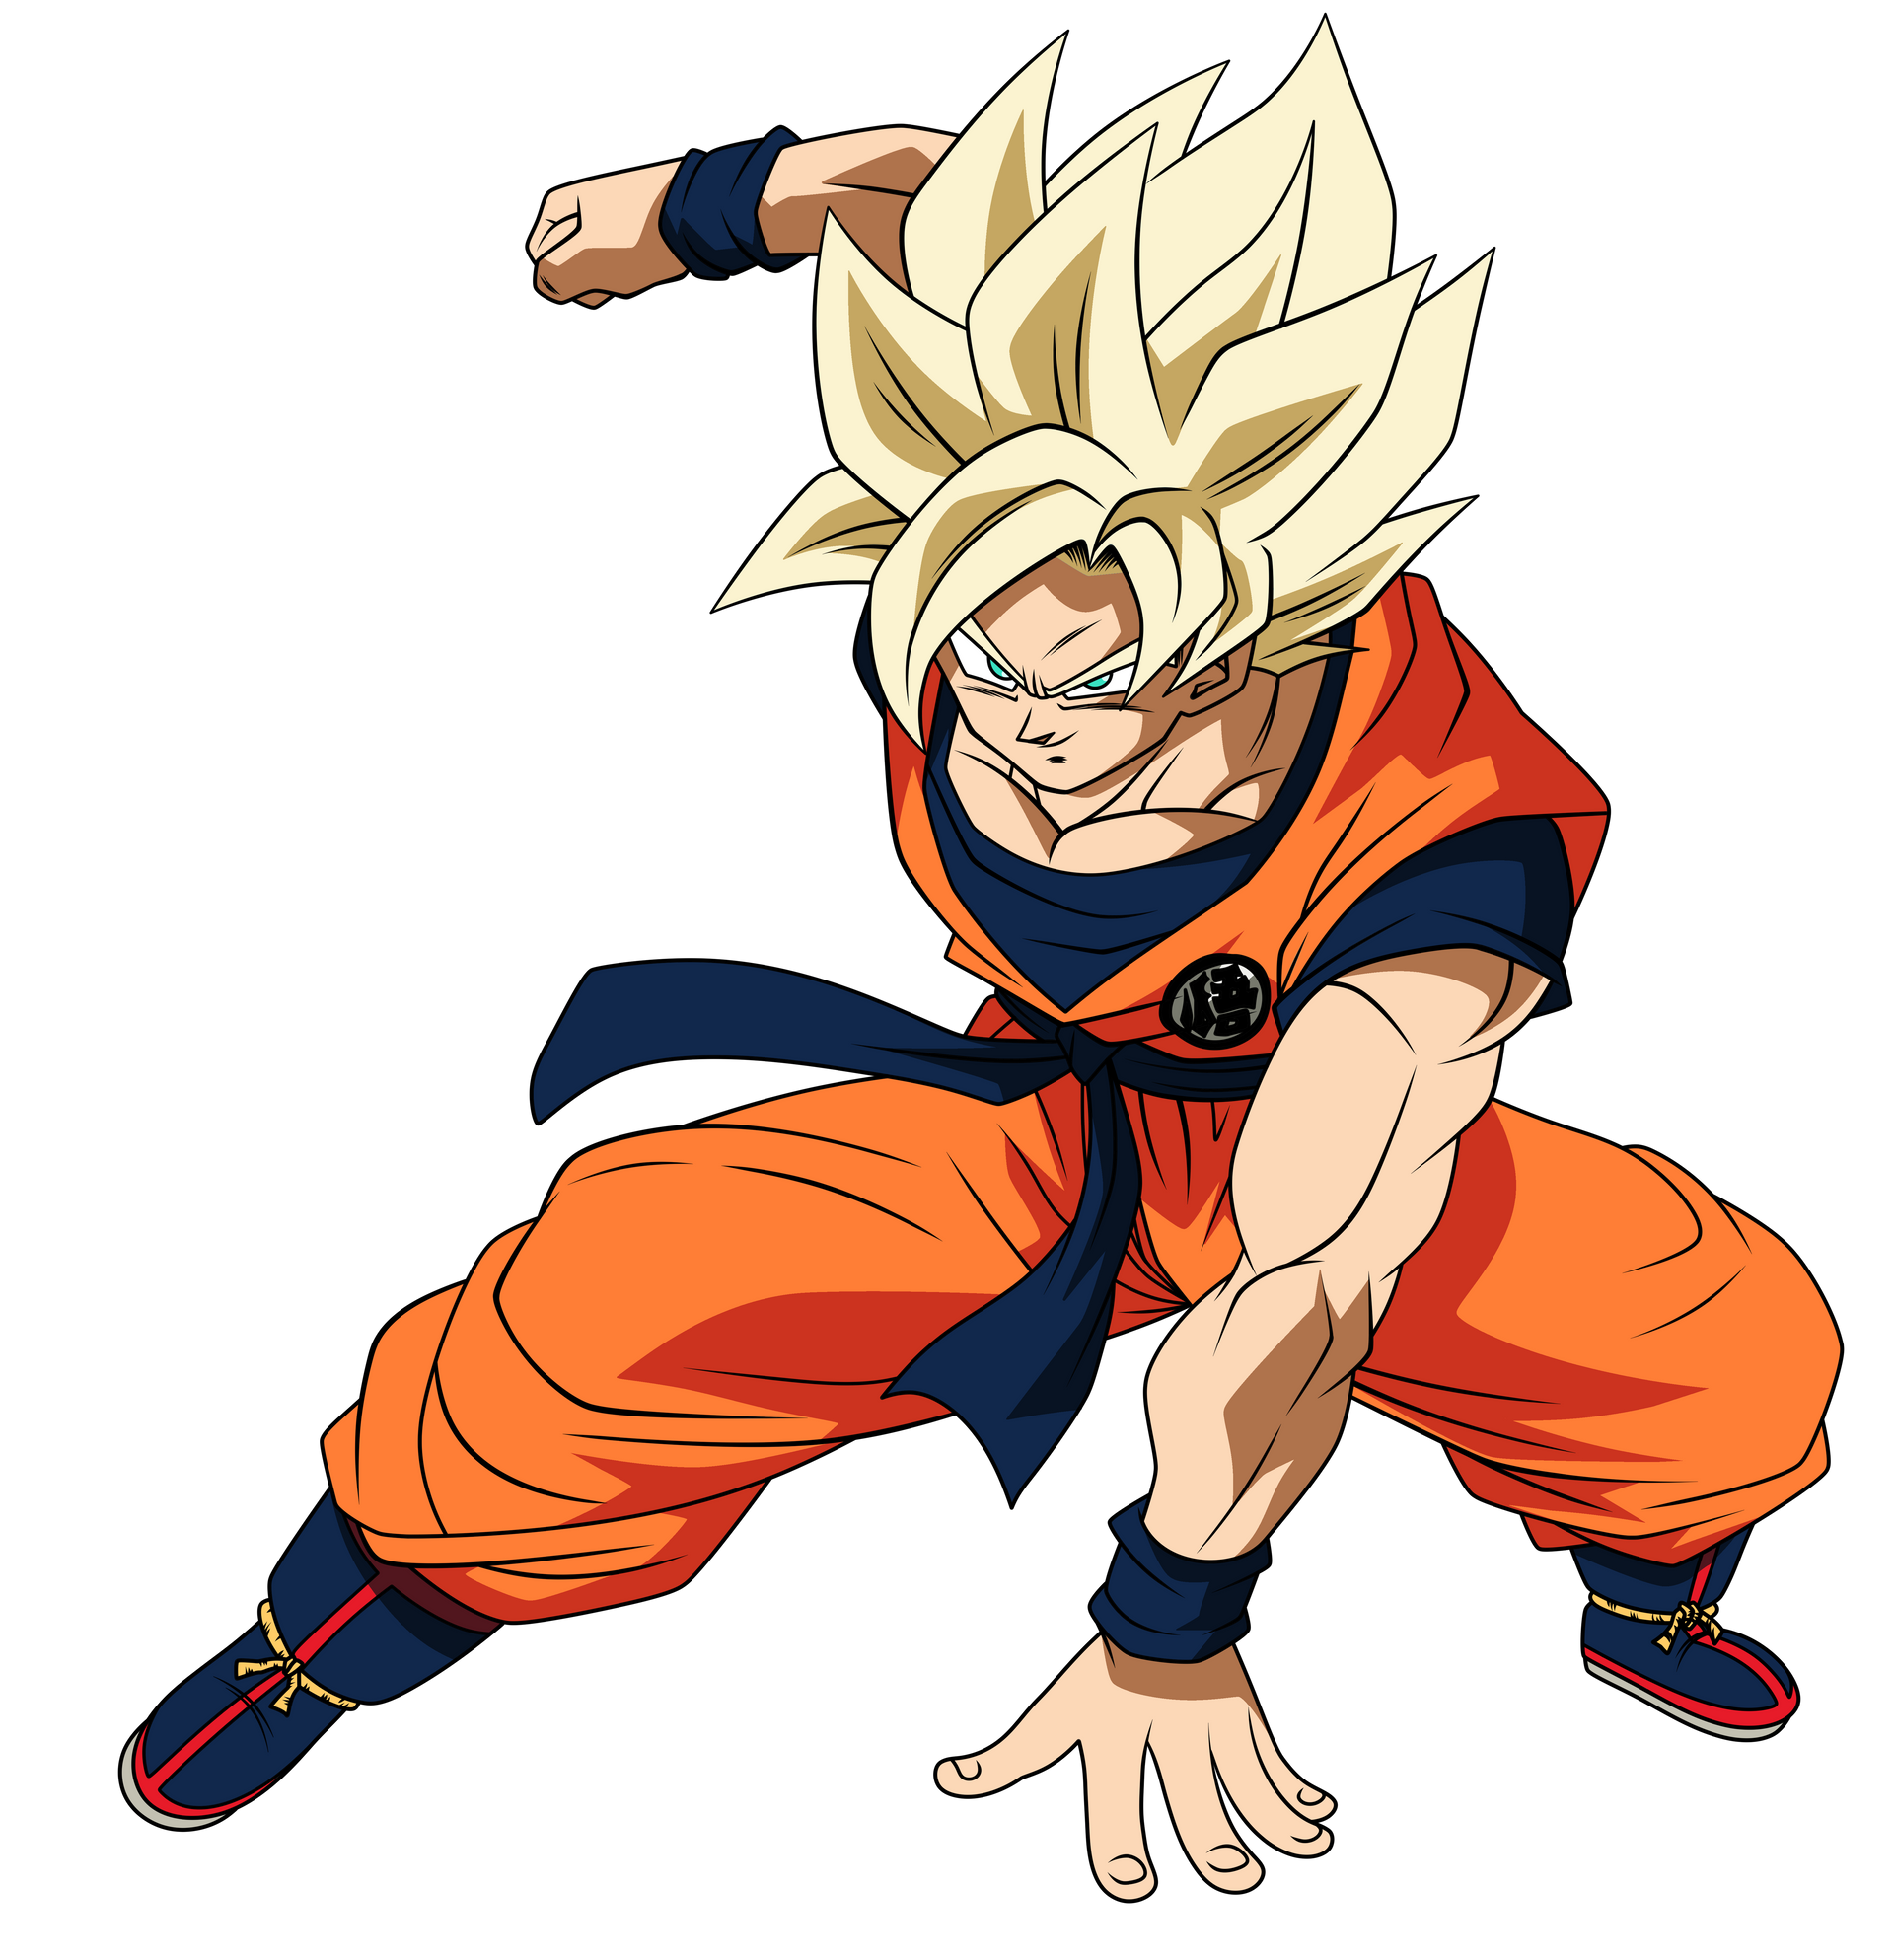 Super Saiyan 2 Goku Version 2 by BrusselTheSaiyan on DeviantArt Anime  dragon ball super, Dragon ball super goku, Anime dragon ball, goku sayajin 2  